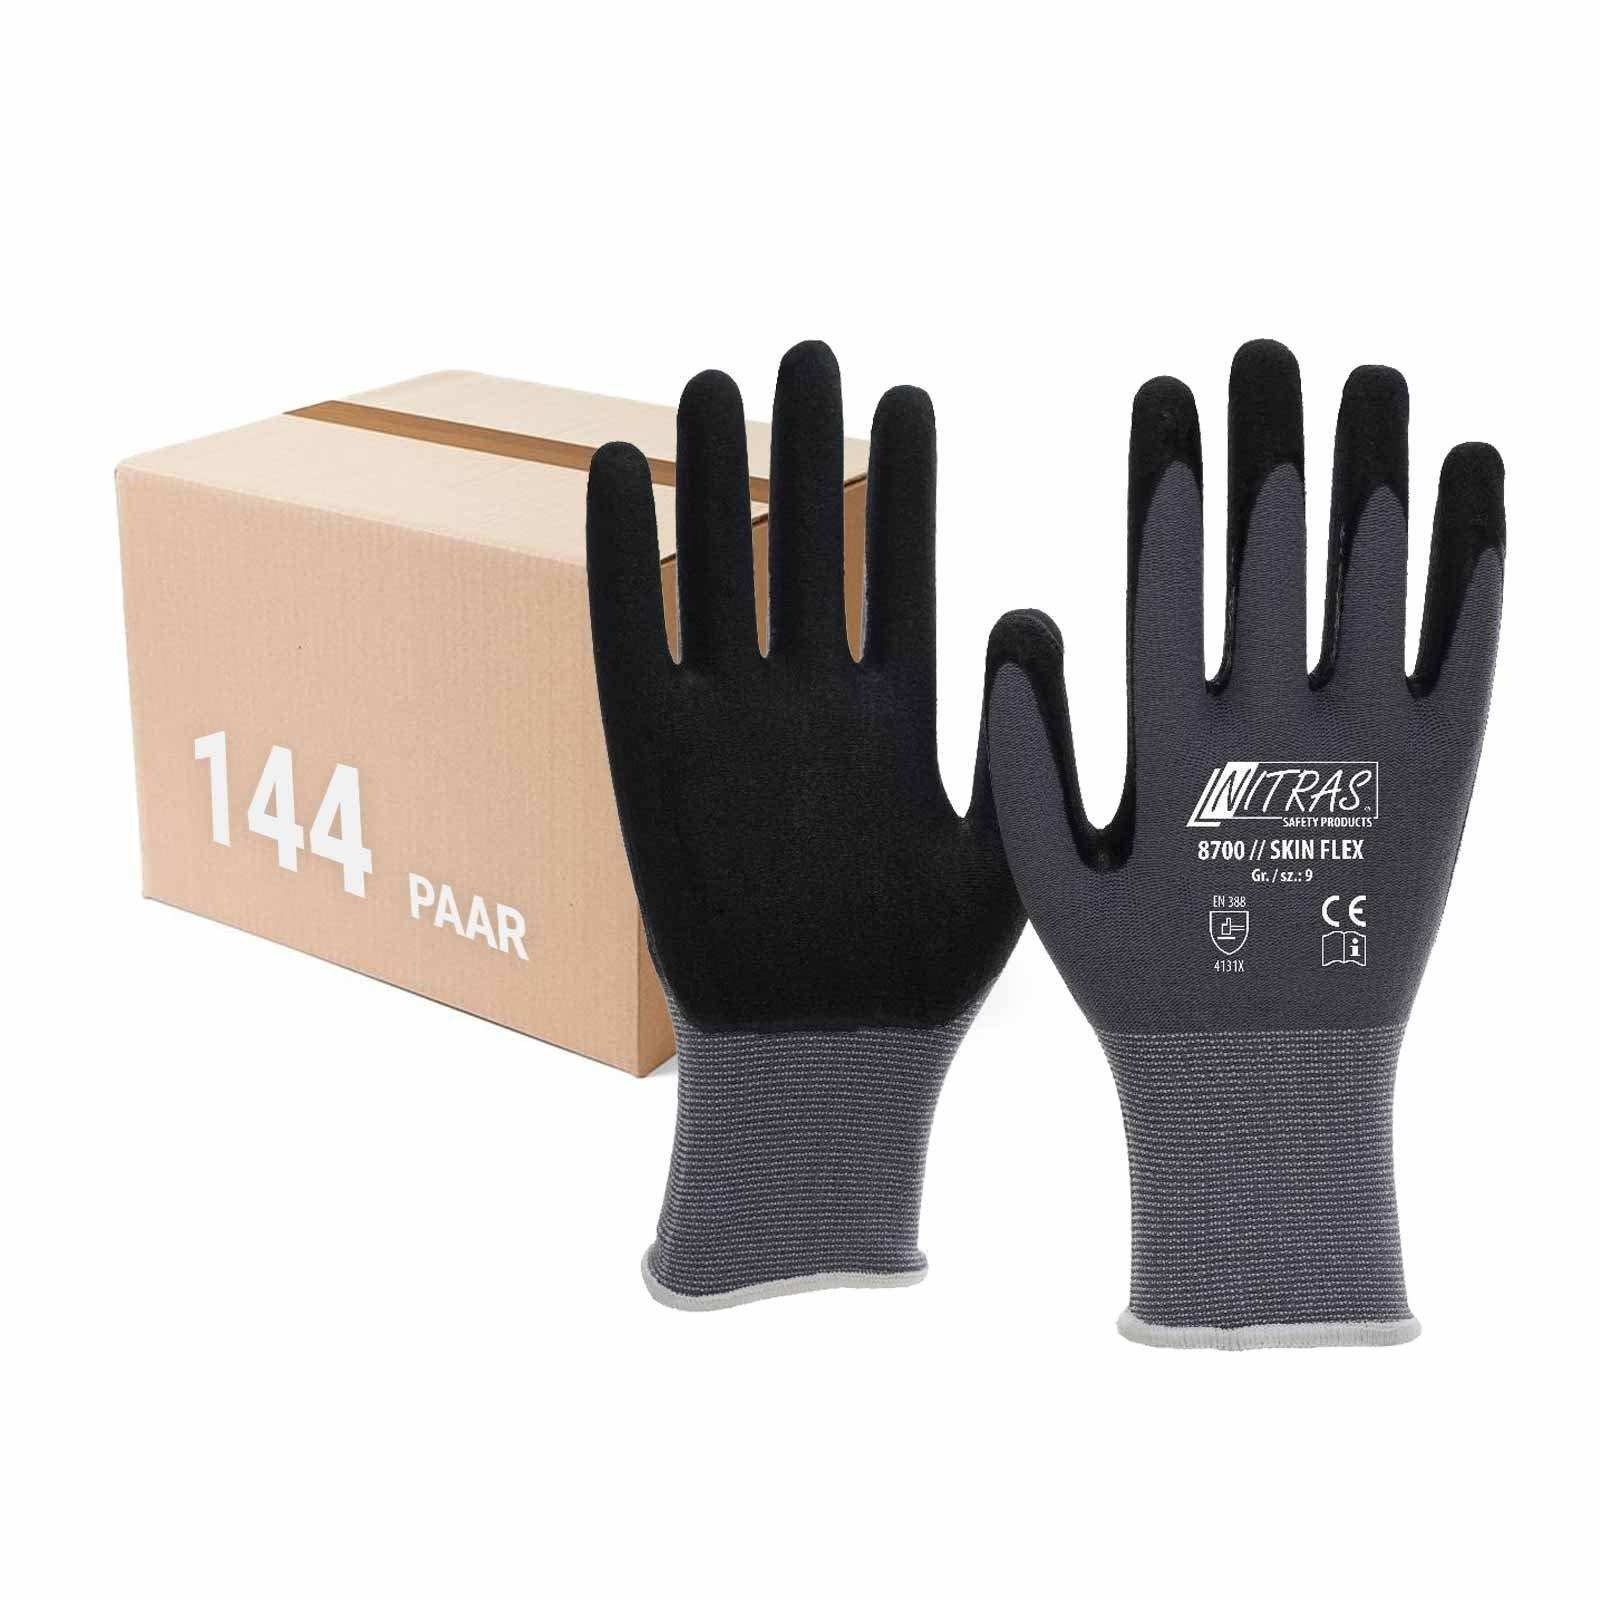 8700 Nitras gestrickte Handschuhe (Spar-Set) NITRAS Paar Skin-Flex Nitril-Handschuhe -144 Strickhandschuhe